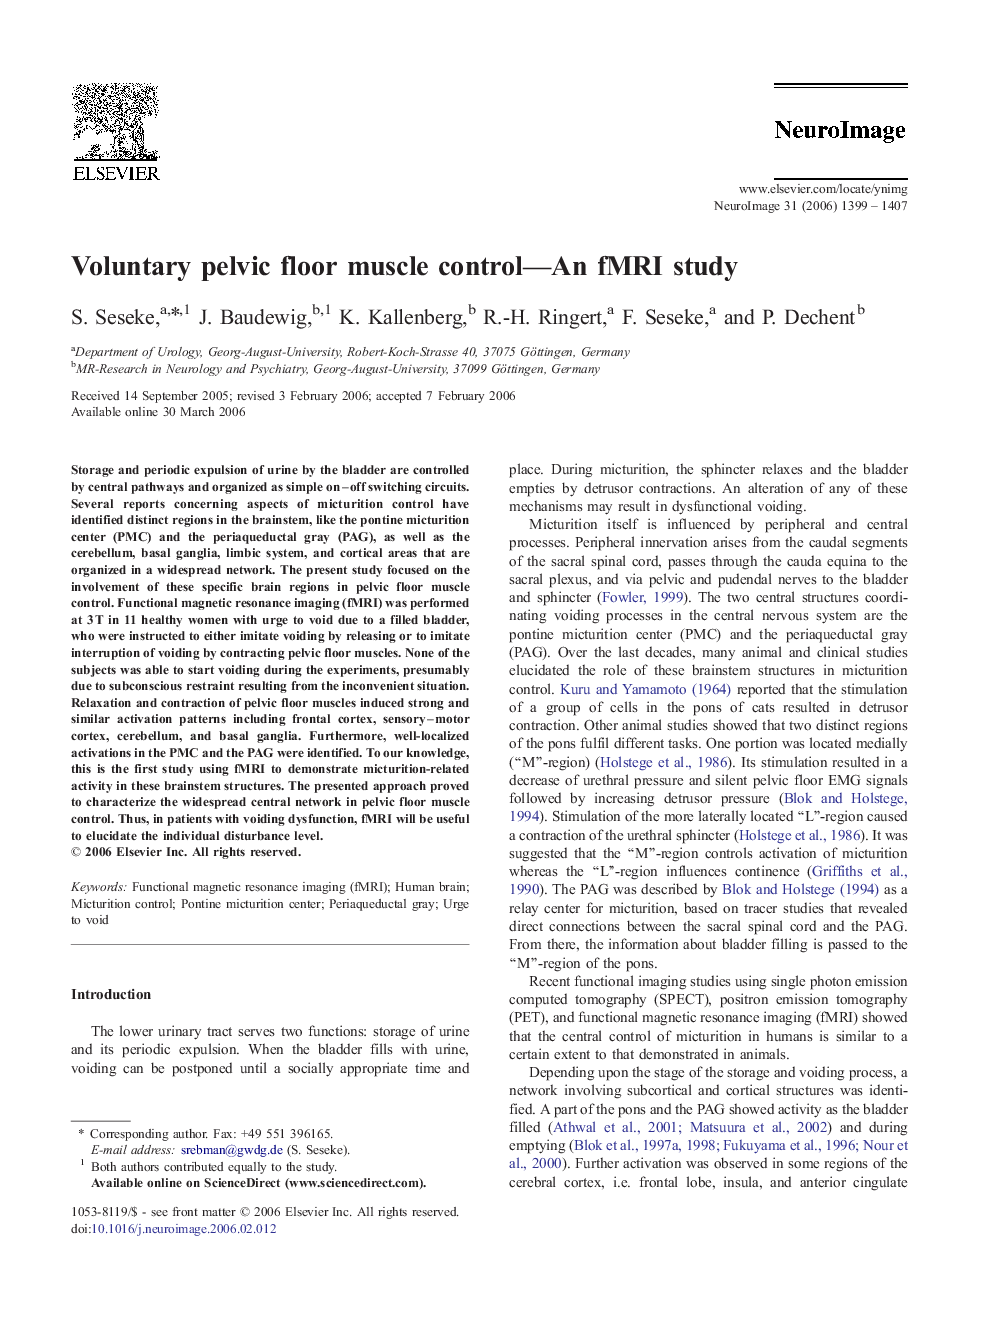 Voluntary pelvic floor muscle control—an fMRI study